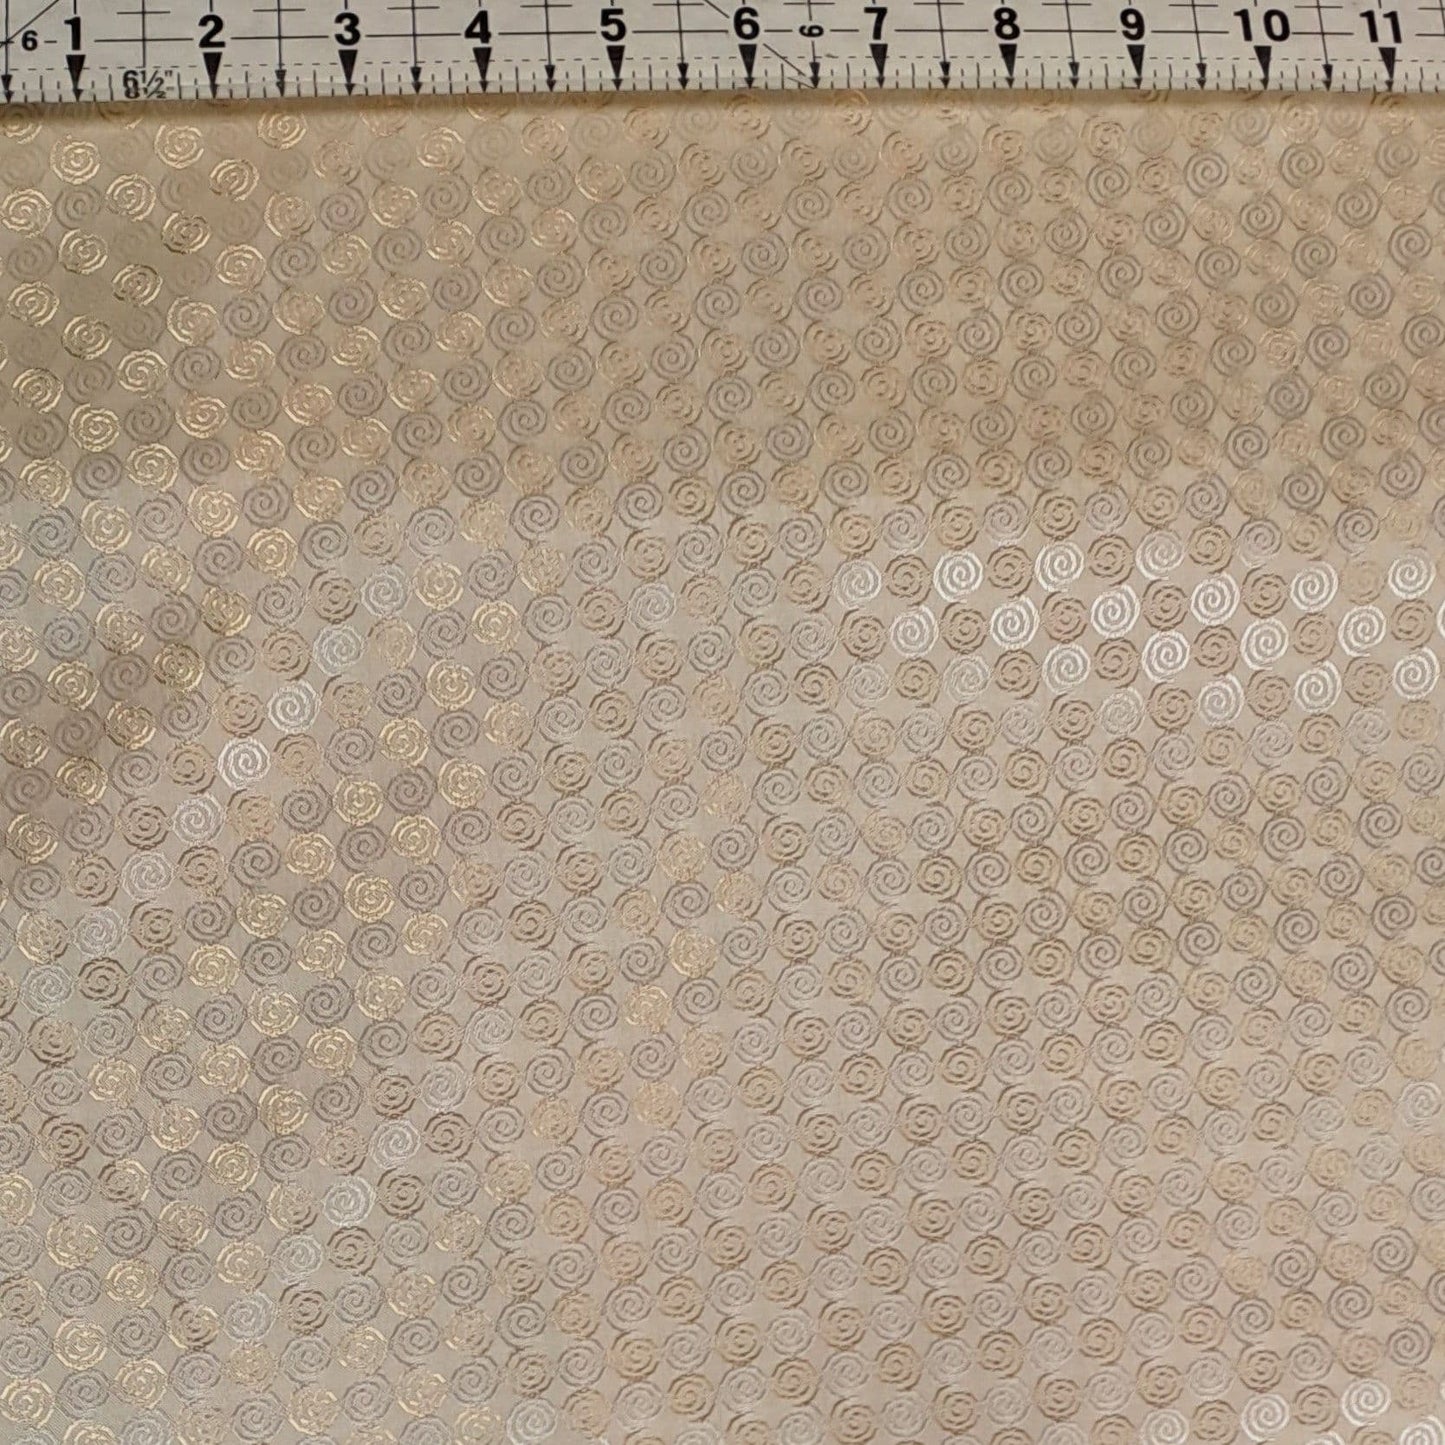 Luxury Viscose Lining - Gold Swirls 60" Wide Fabric